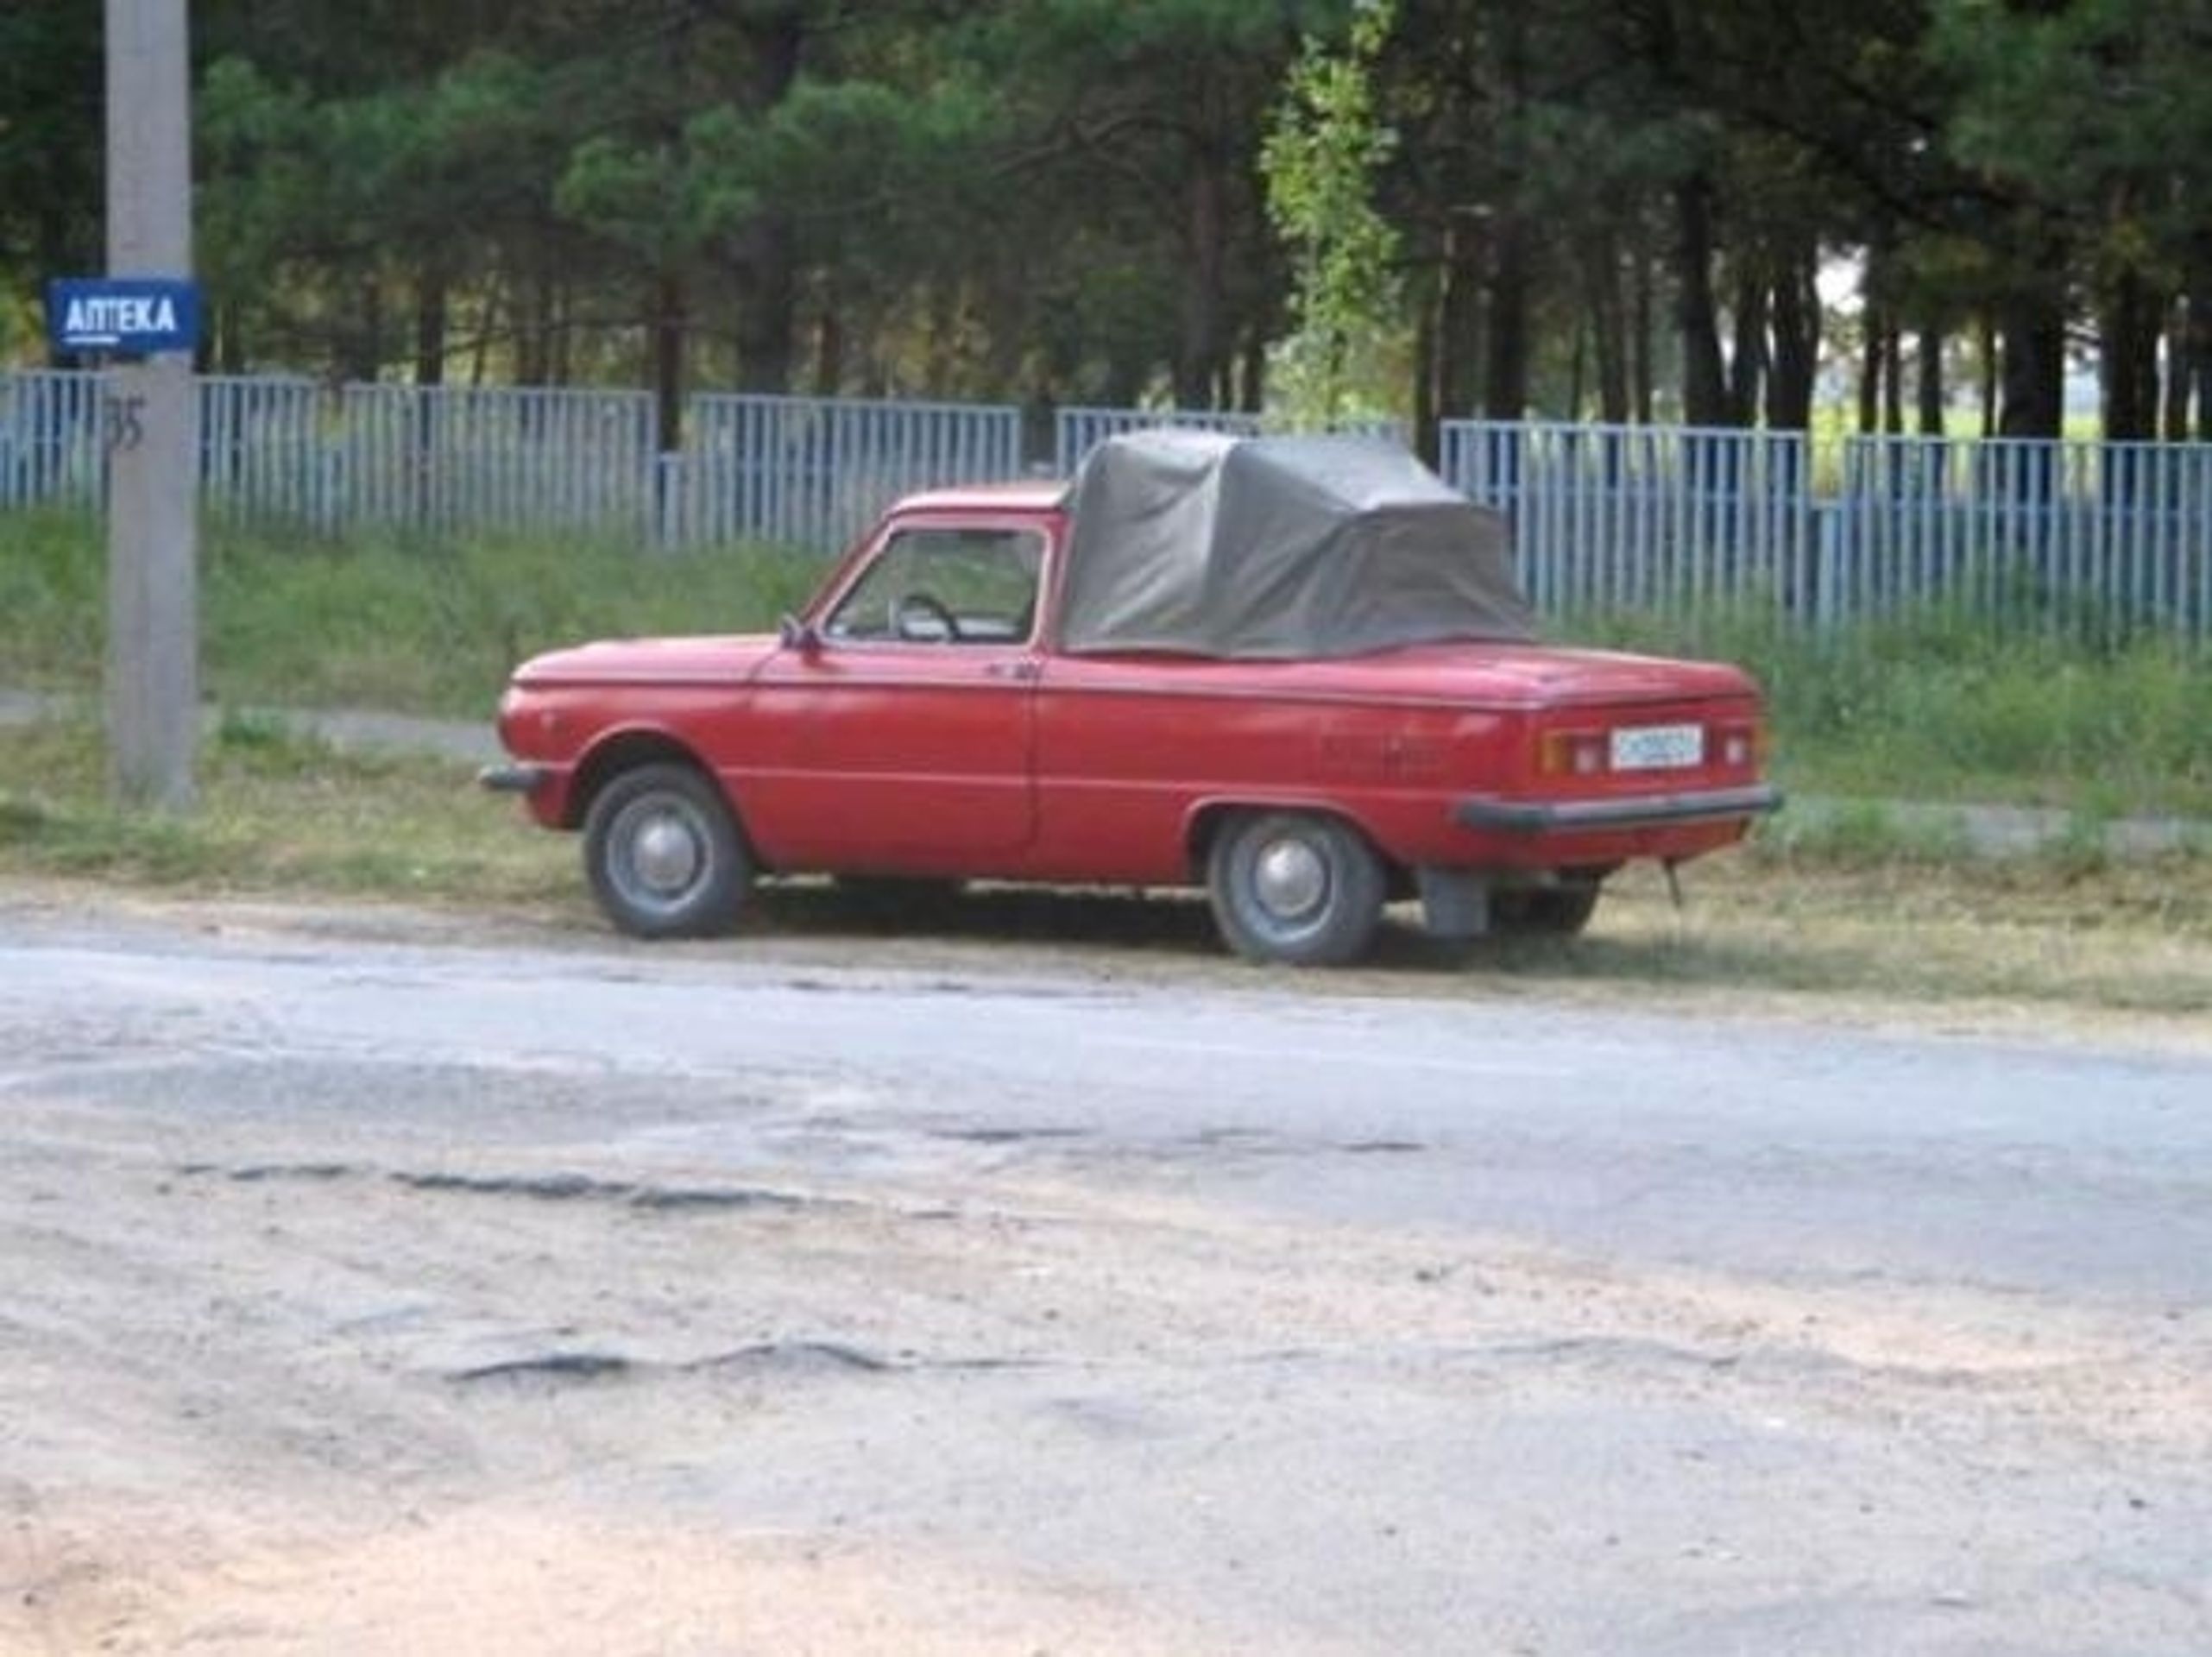 Ruské automobilové speciály - 11 - GALERIE Ruské automobilové speciály (2/11)